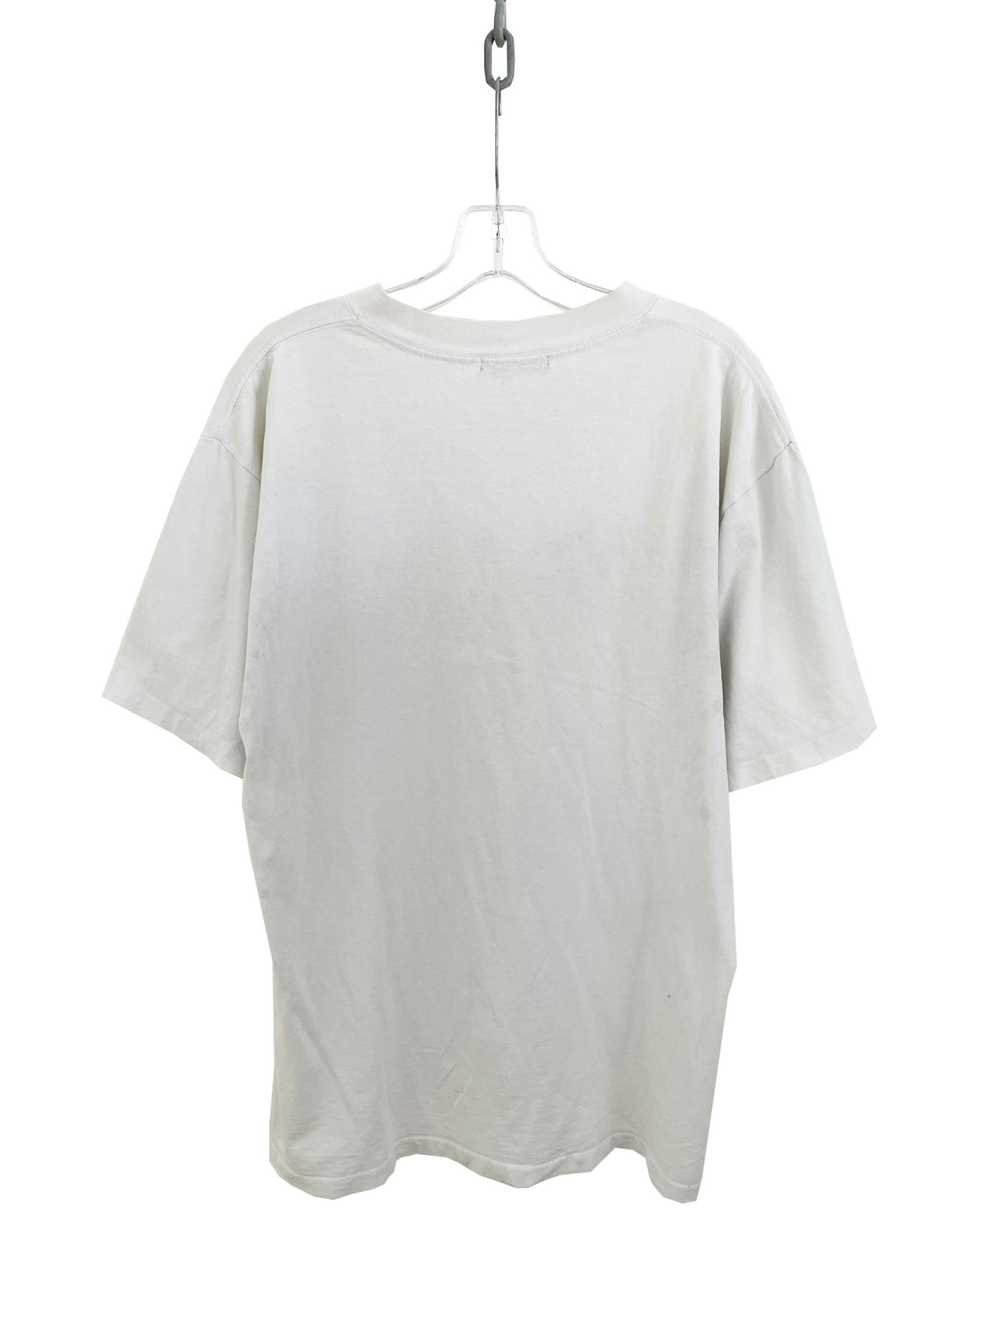 Undercover 90’s Milk T-Shirt - image 7